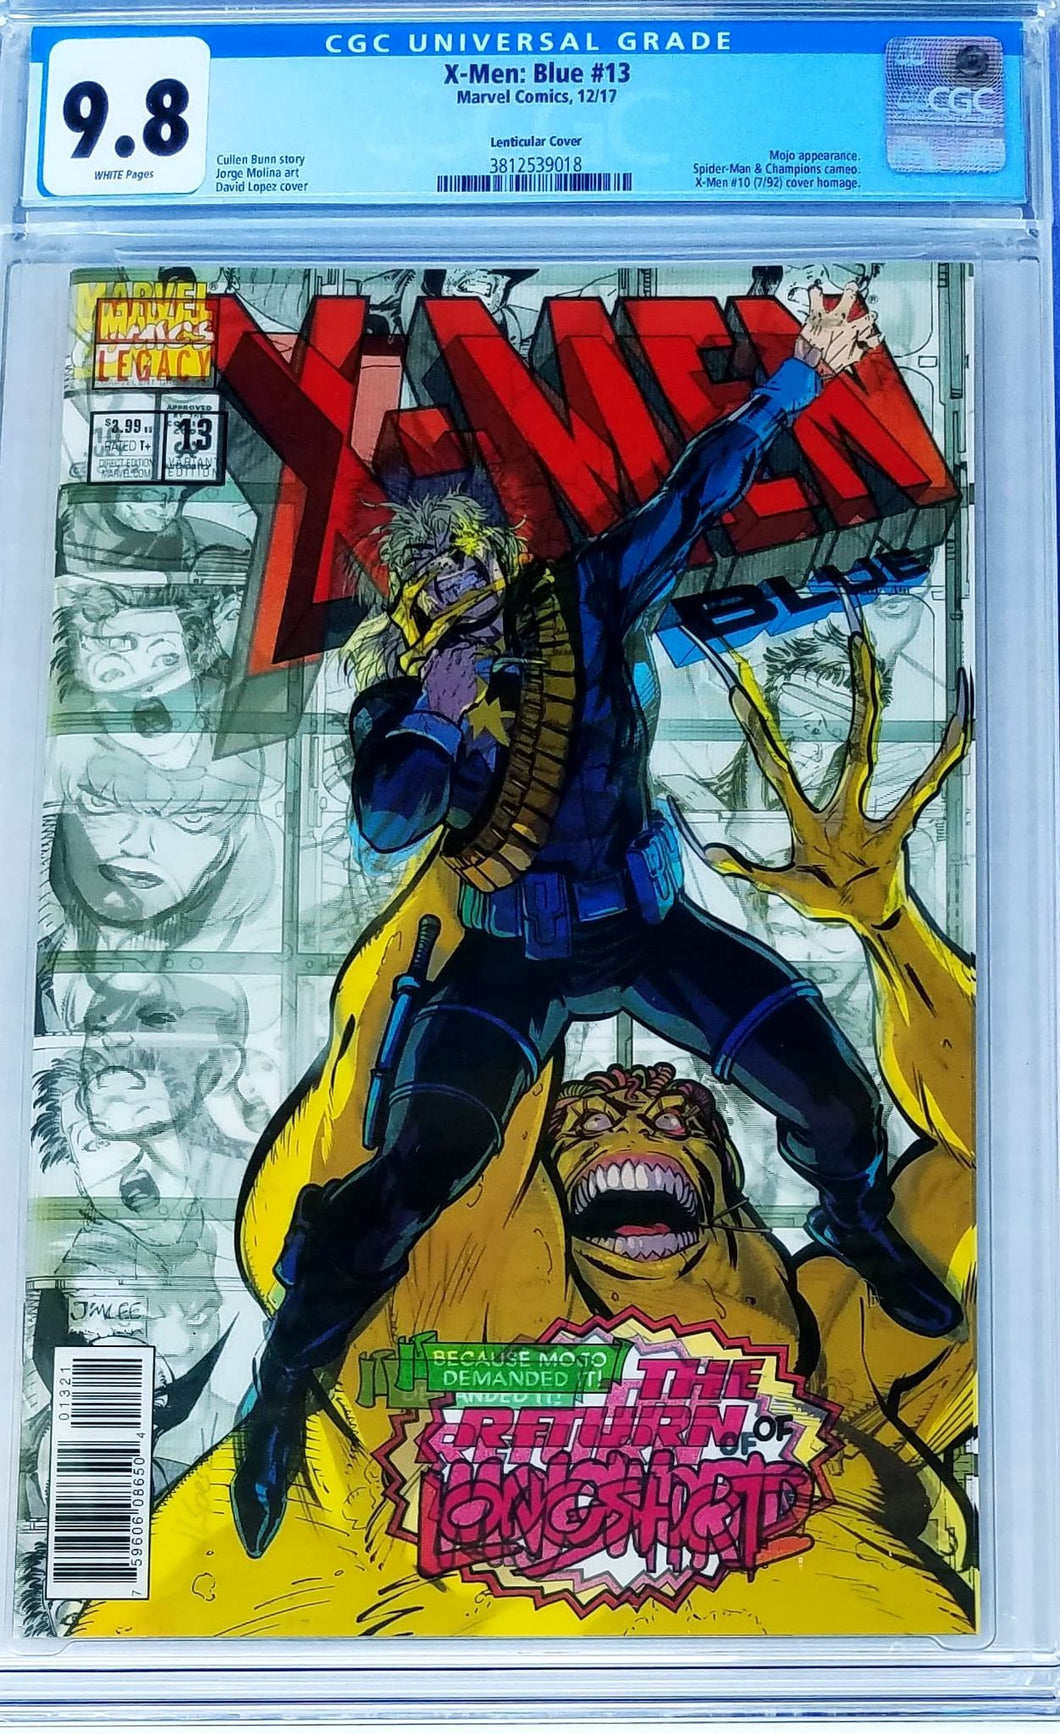 X-Men Blue #13 CGC 9.8 - Longshot Lenticular Variant Cover (Marvel Comics, 2017)